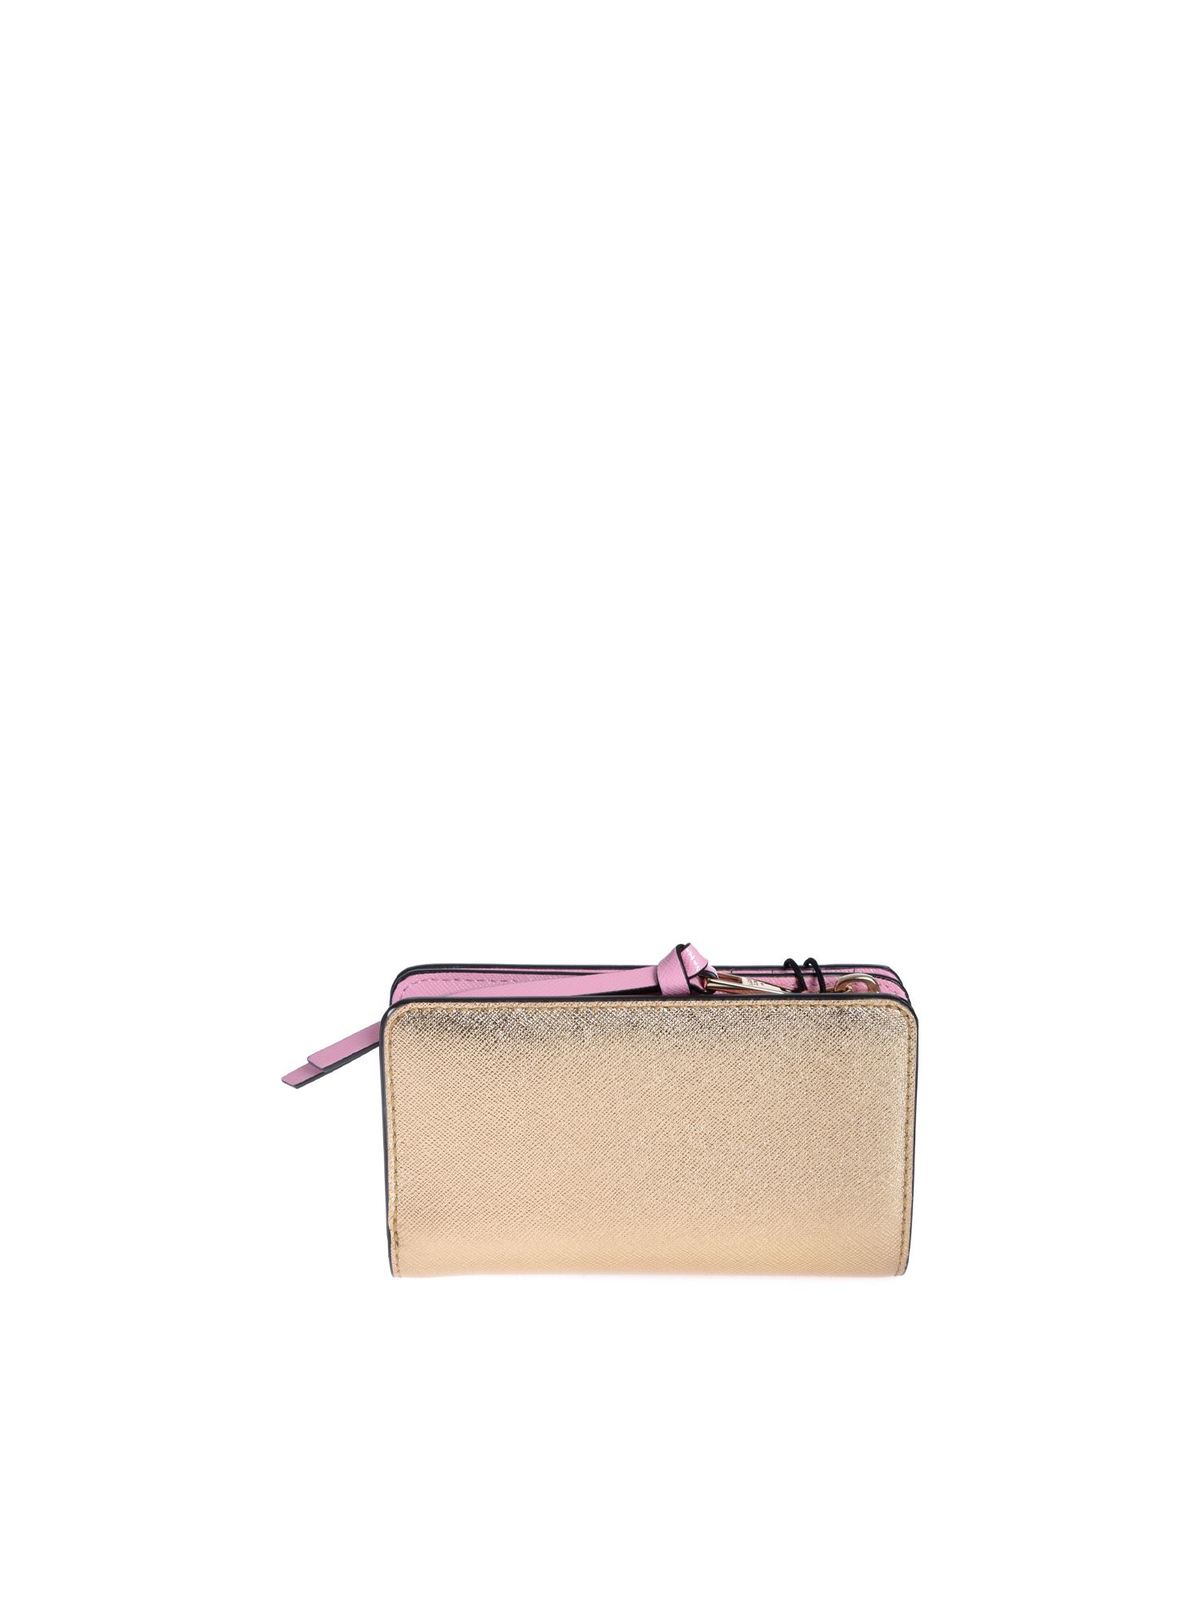 Marc Jacobs New Black Multi Snapshot Compact Wallet M0014281-003 - Handbags  - Jomashop